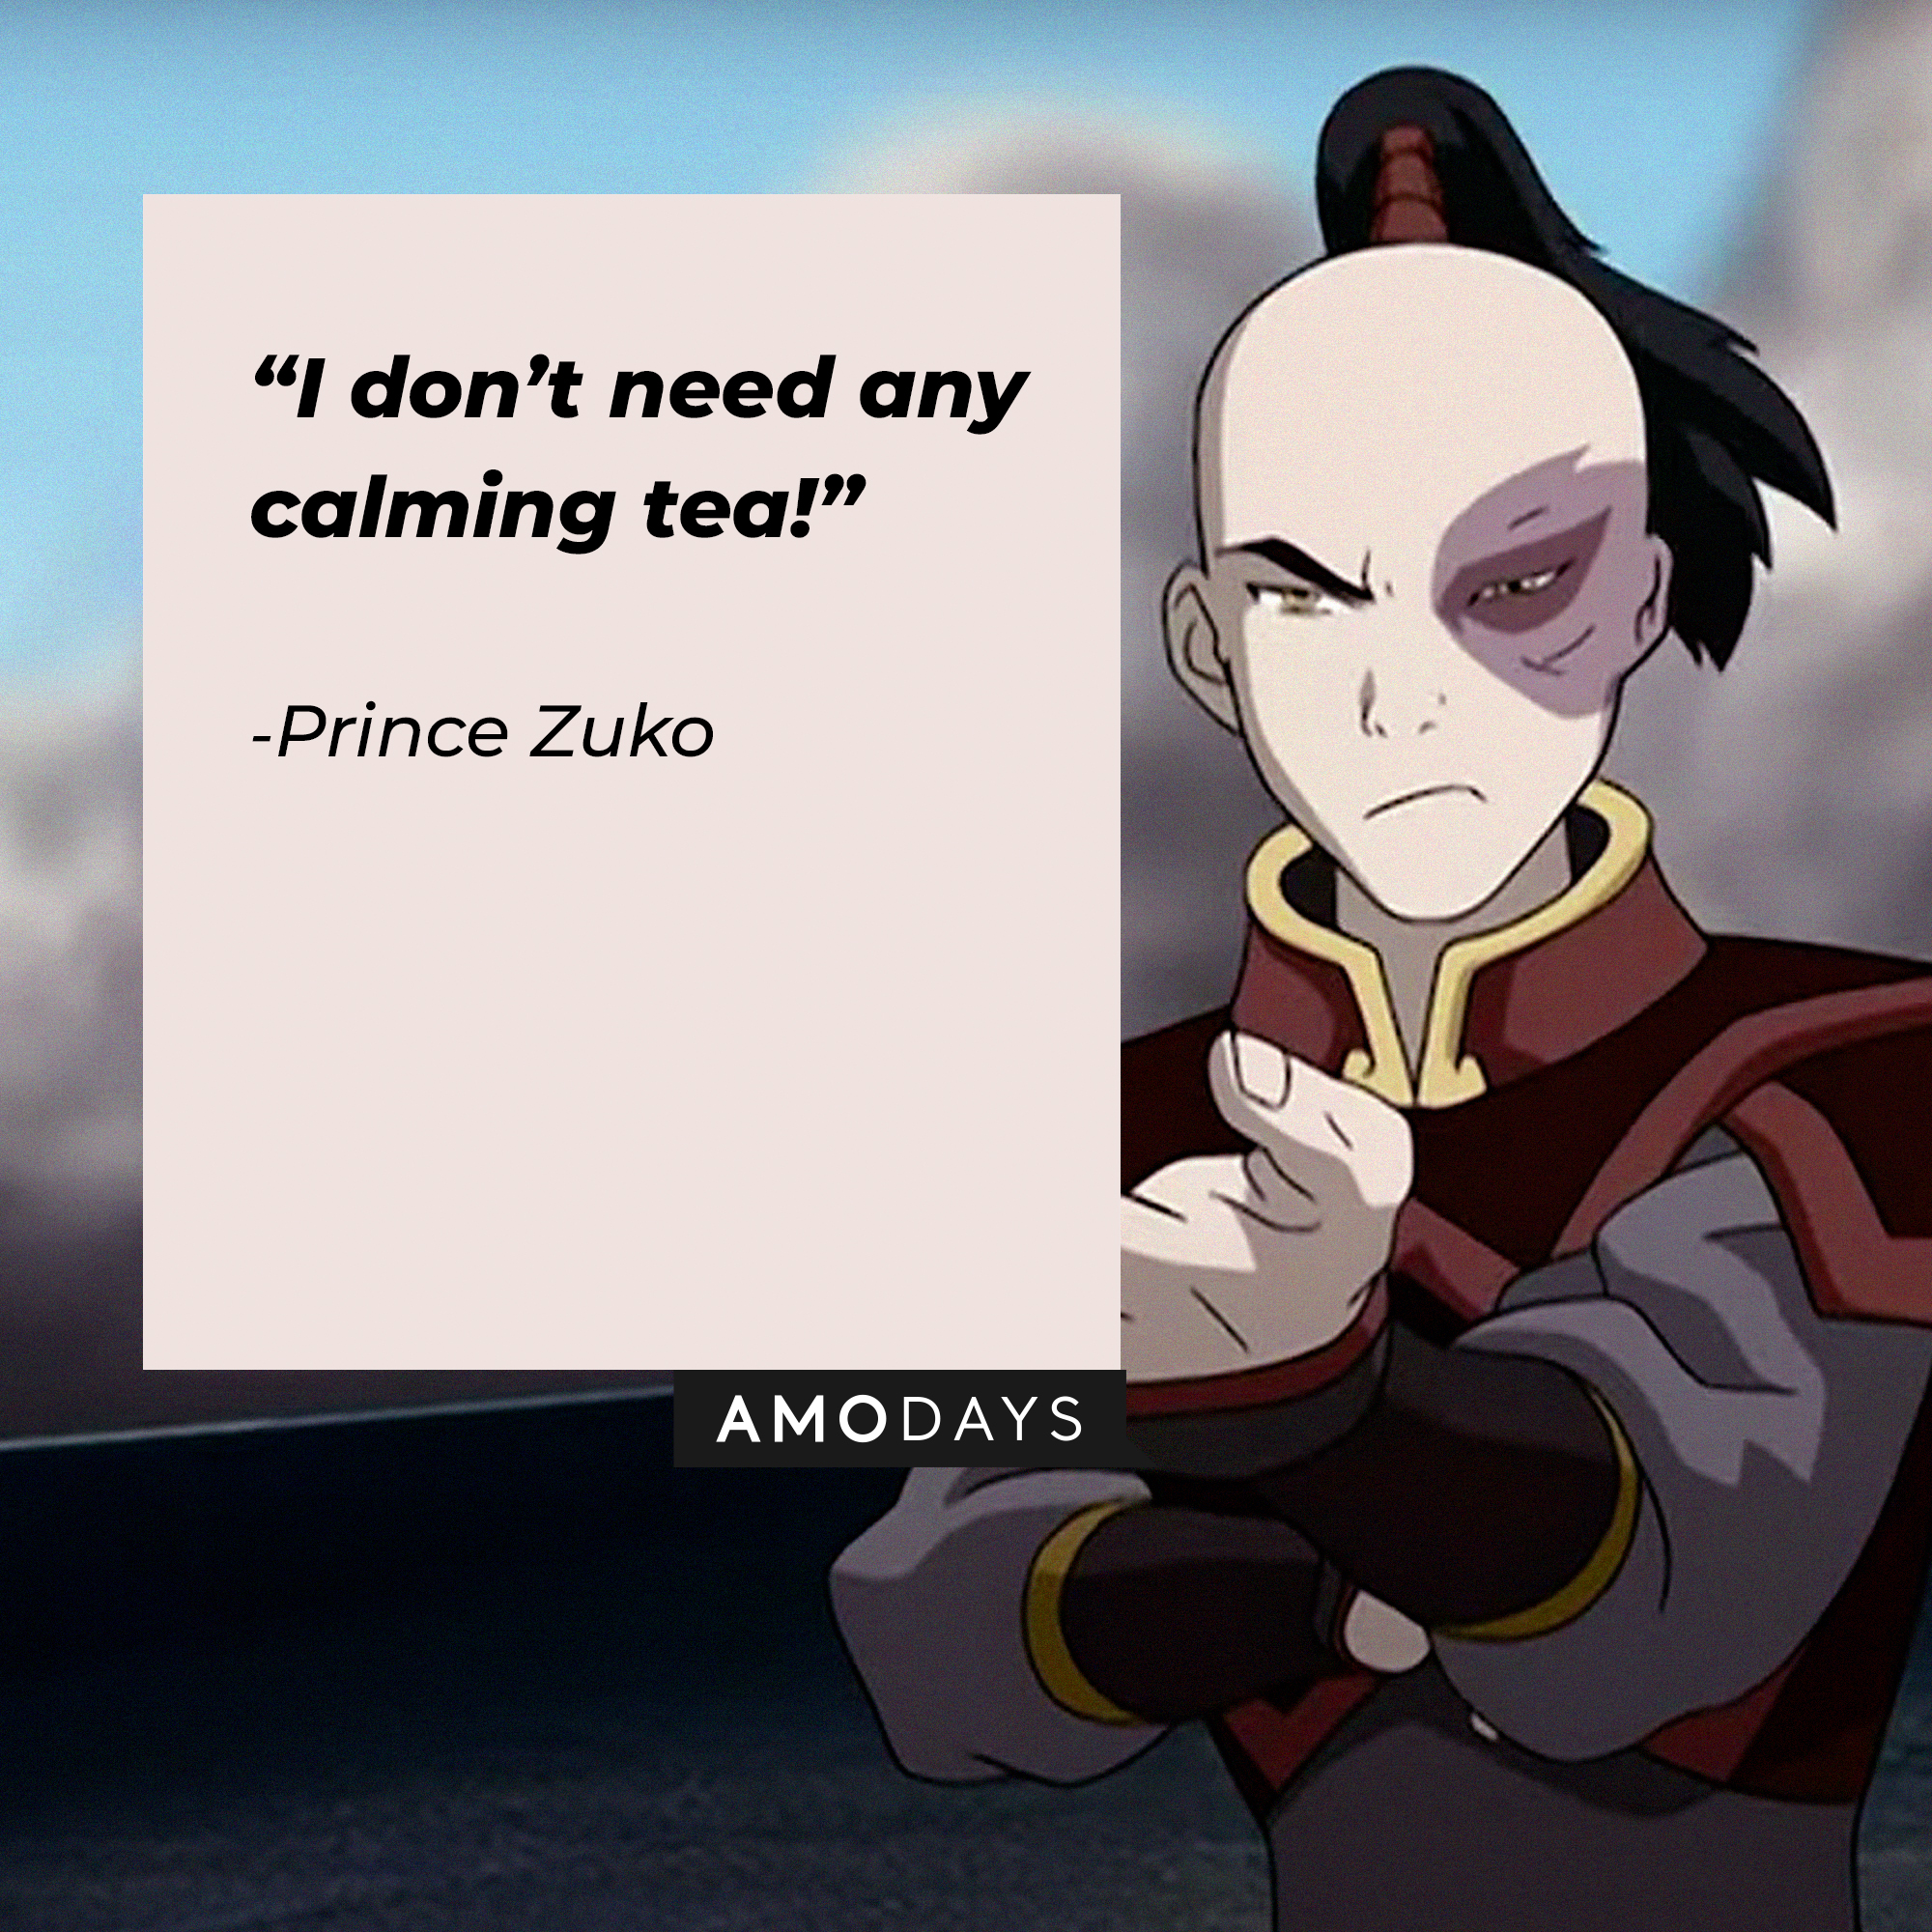 Zuko's quote: “I don’t need any calming tea!” | Source: youtube.com/TeamAvatar